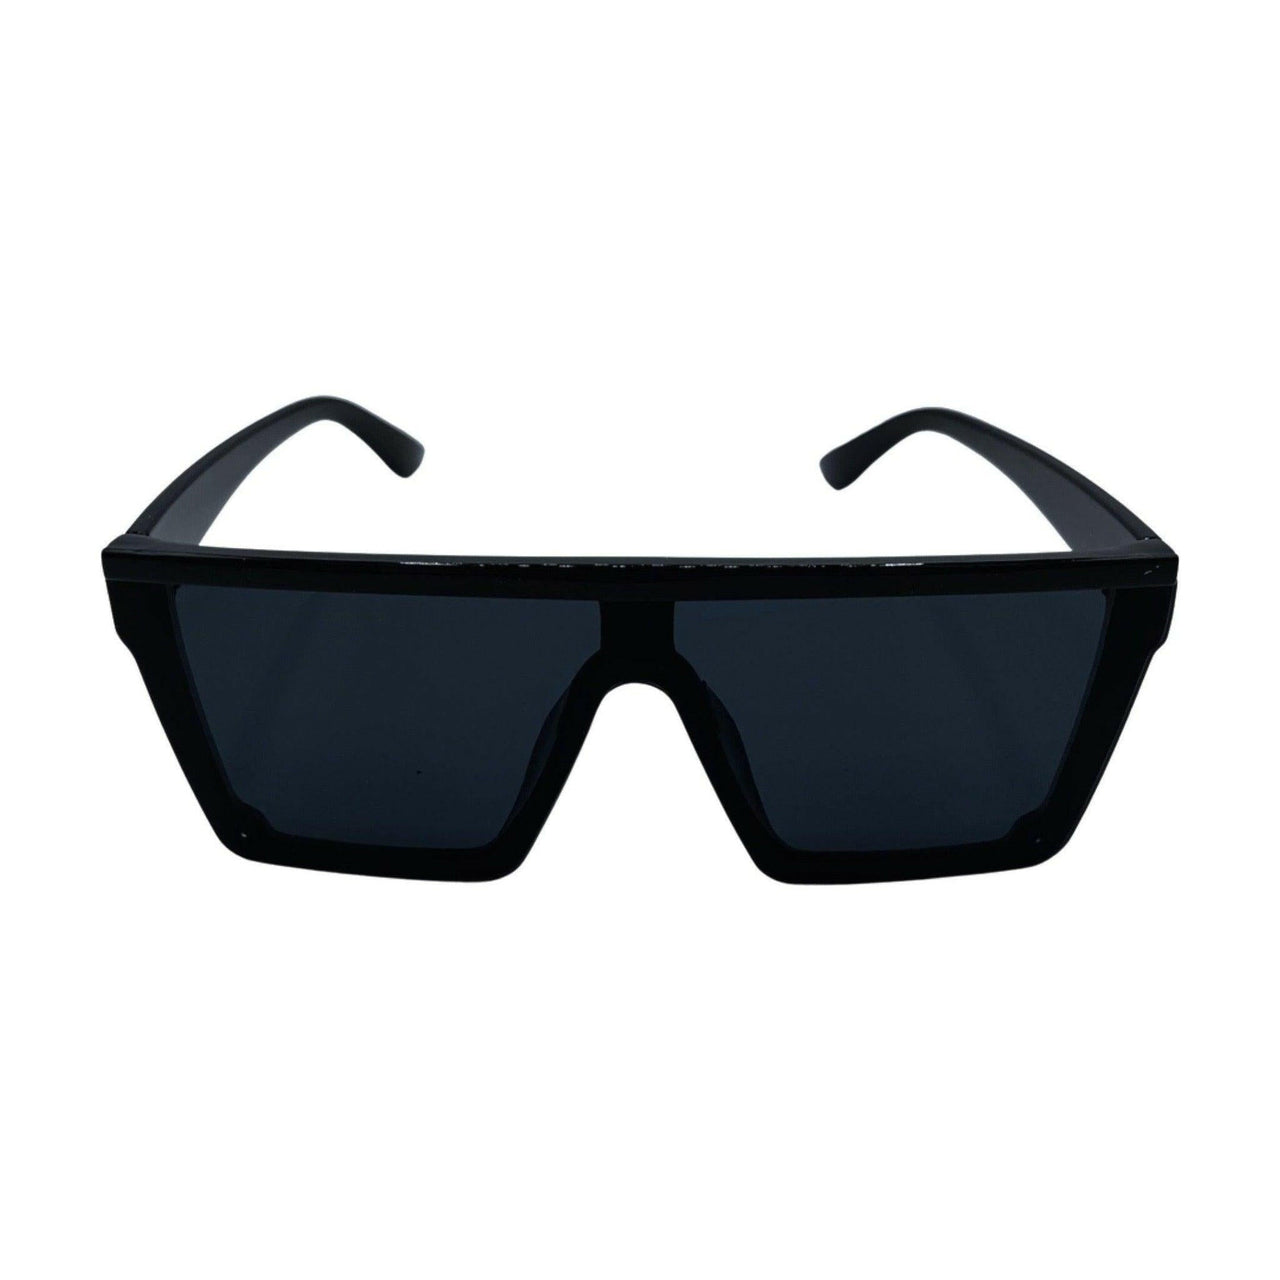 Black OG Sunglasses - Rebel Reaper Clothing Company Sunglasses